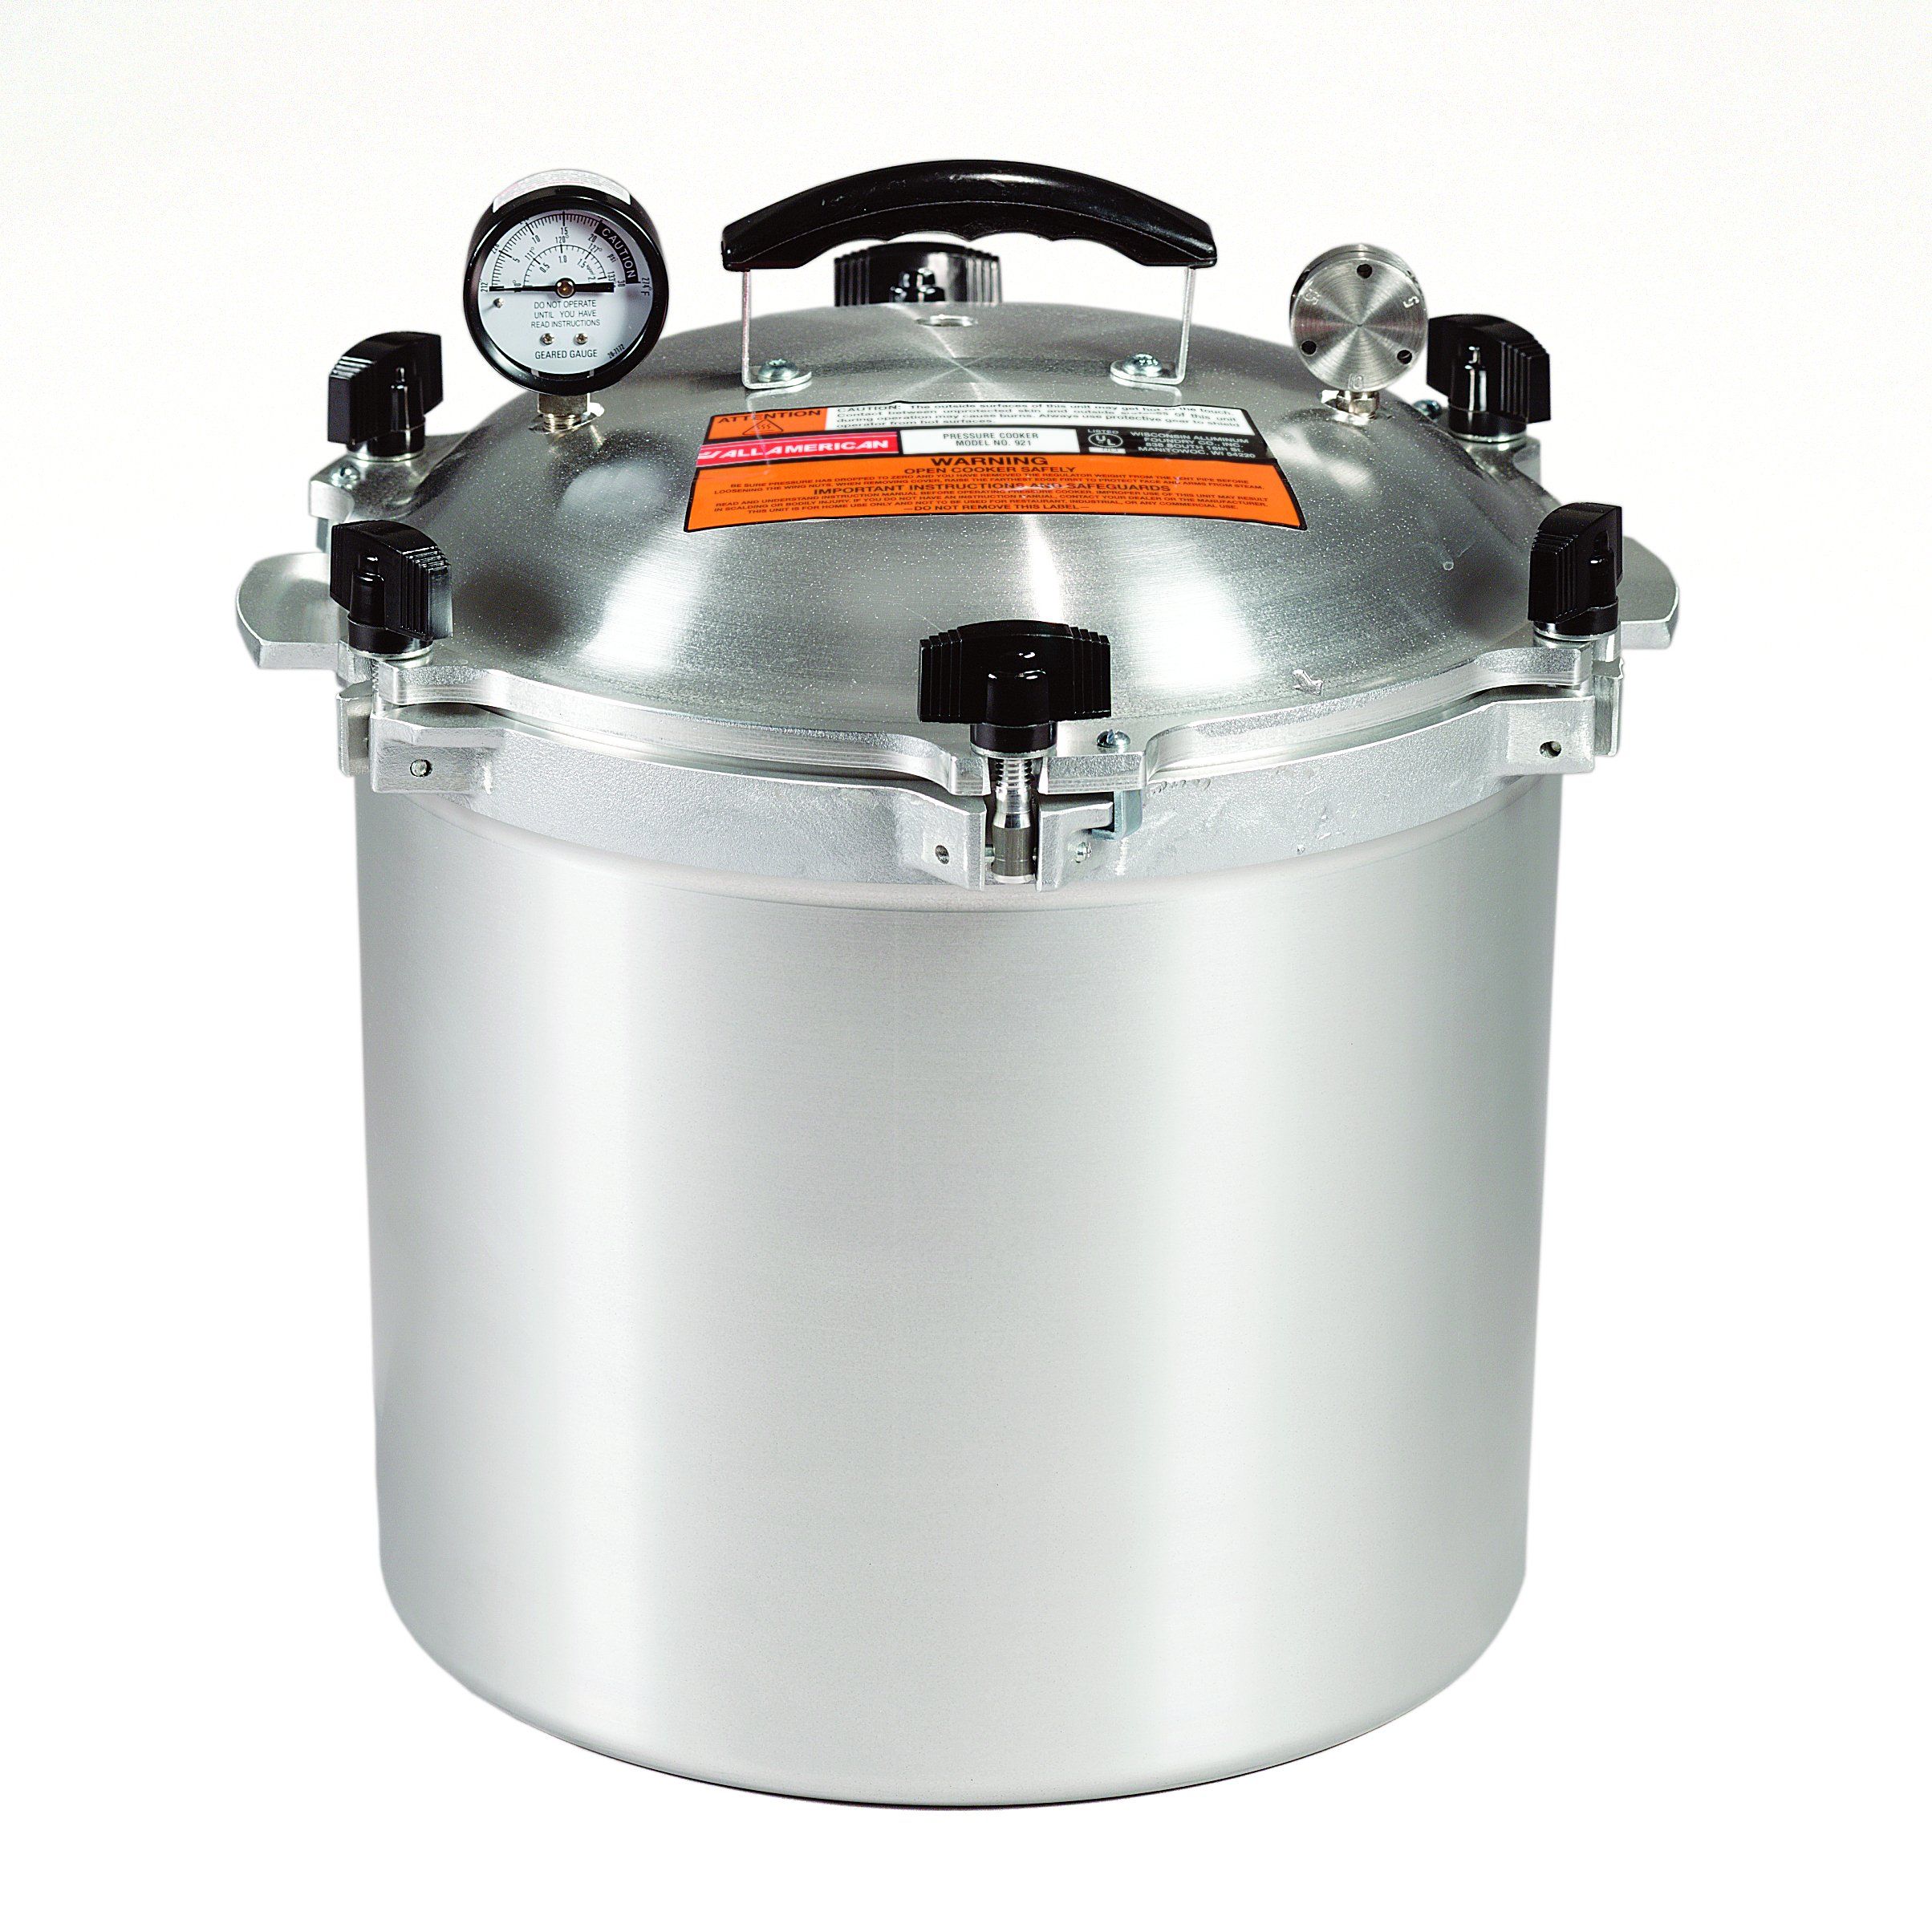 Electric Pressure Cooker For Canning Quart Jars